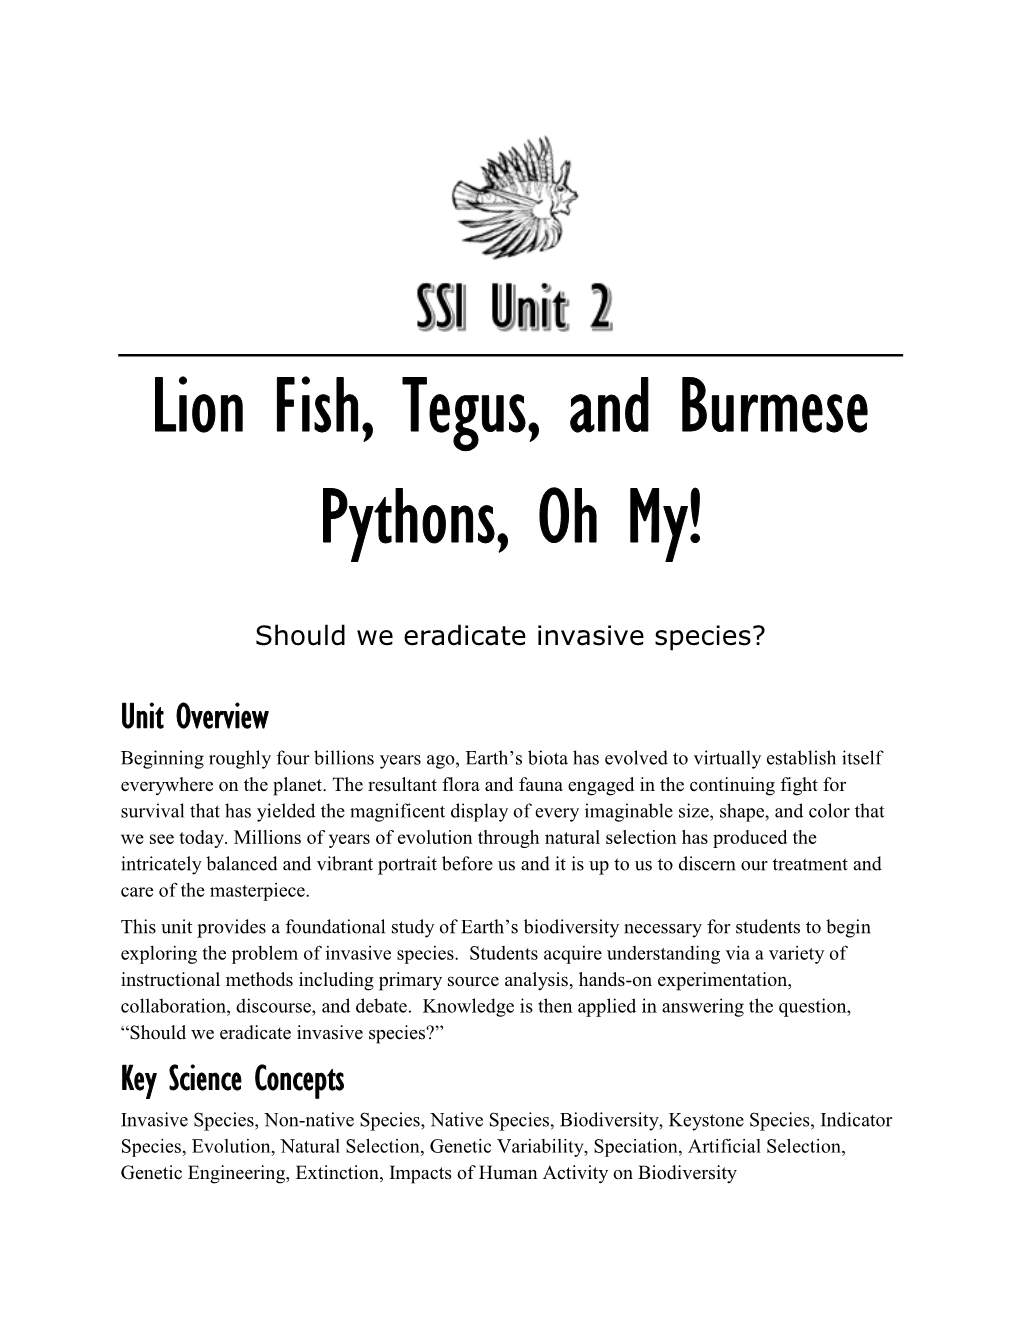 Lion Fish, Tegus, and Burmese Pythons, Oh My!